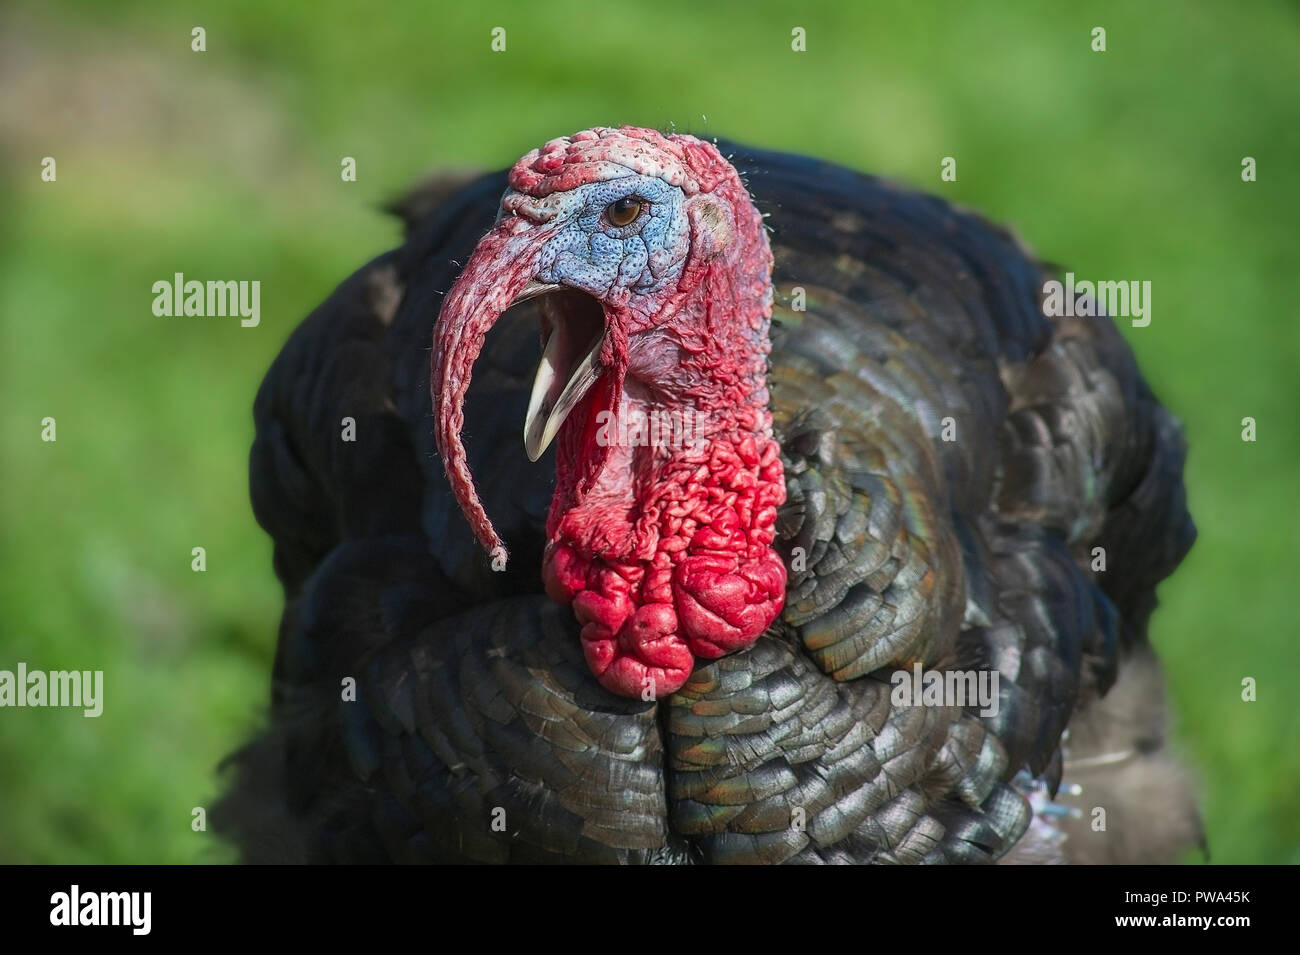 Domestic Turkey, Meleagris Gallopavo, portrait in closeup, camera eye view Stock Photo